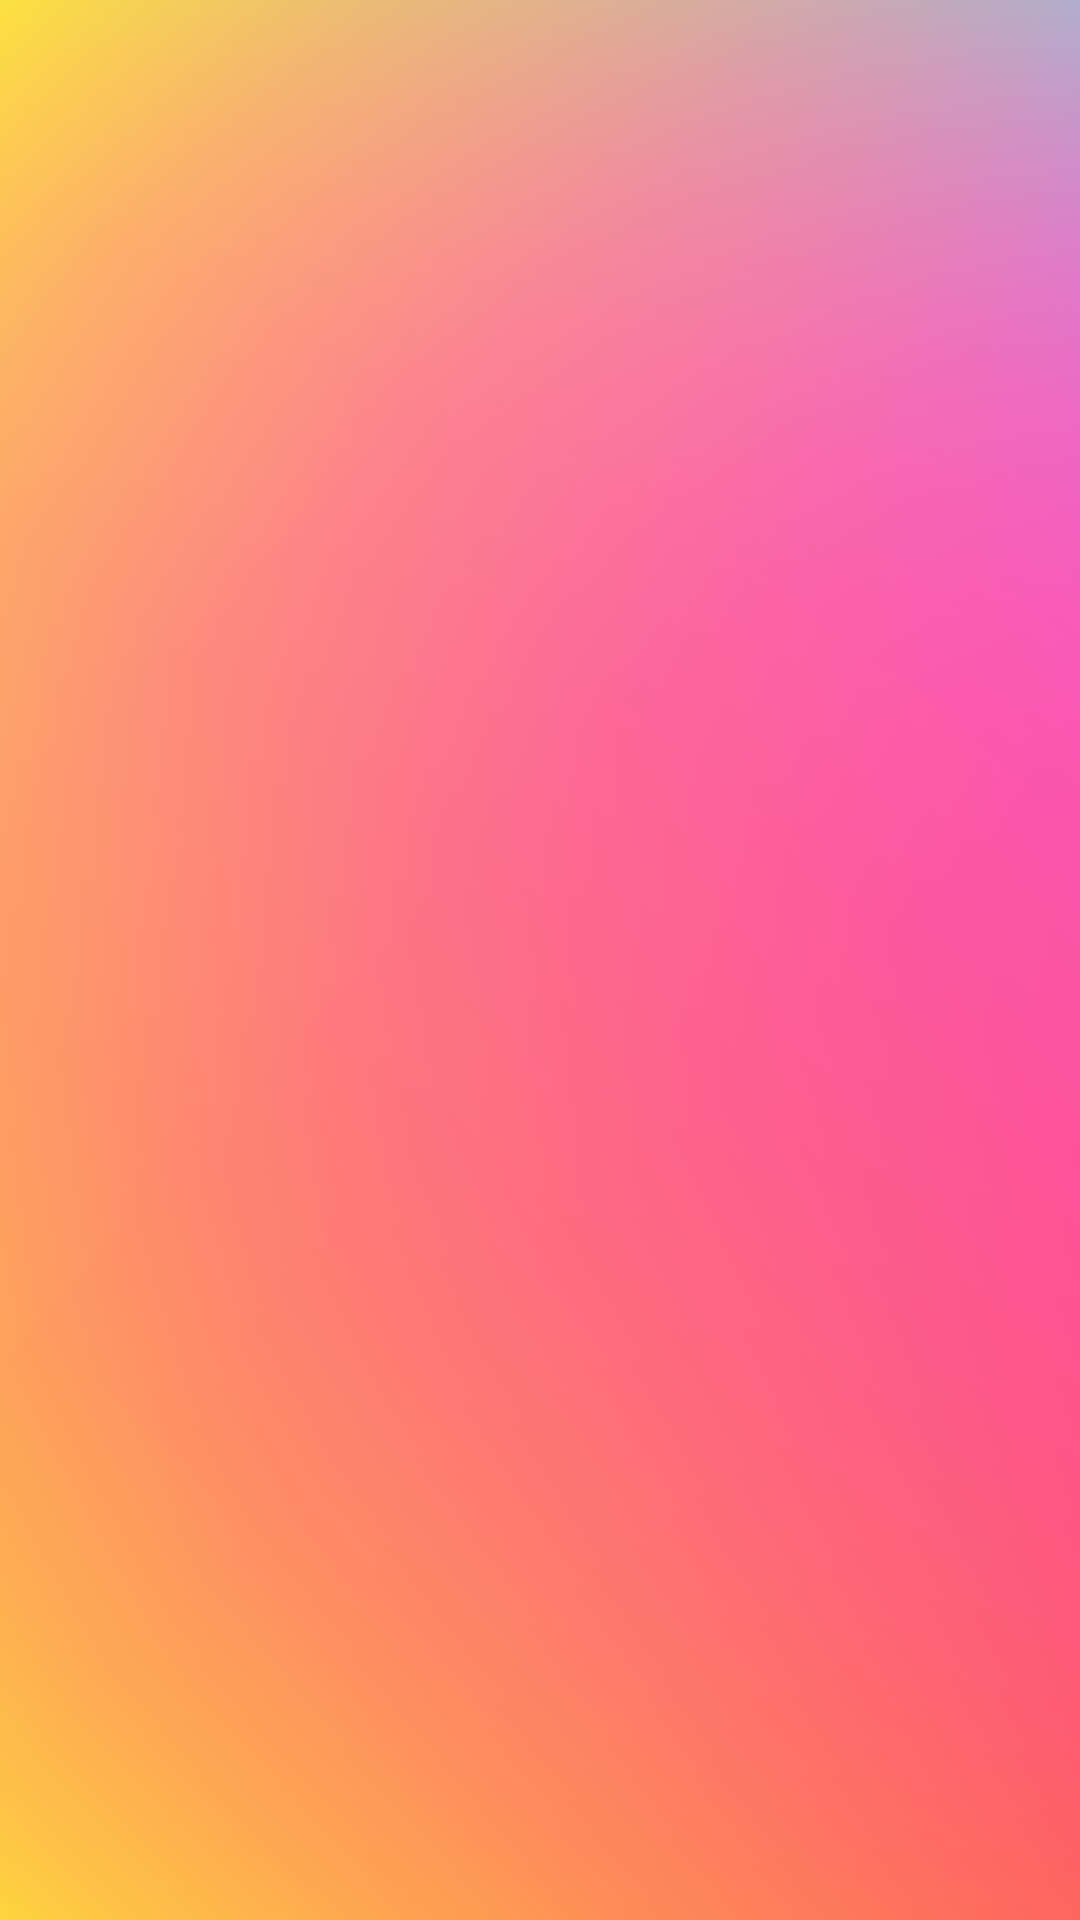 Pastel Gradient Background Vibrant Pink And Orange